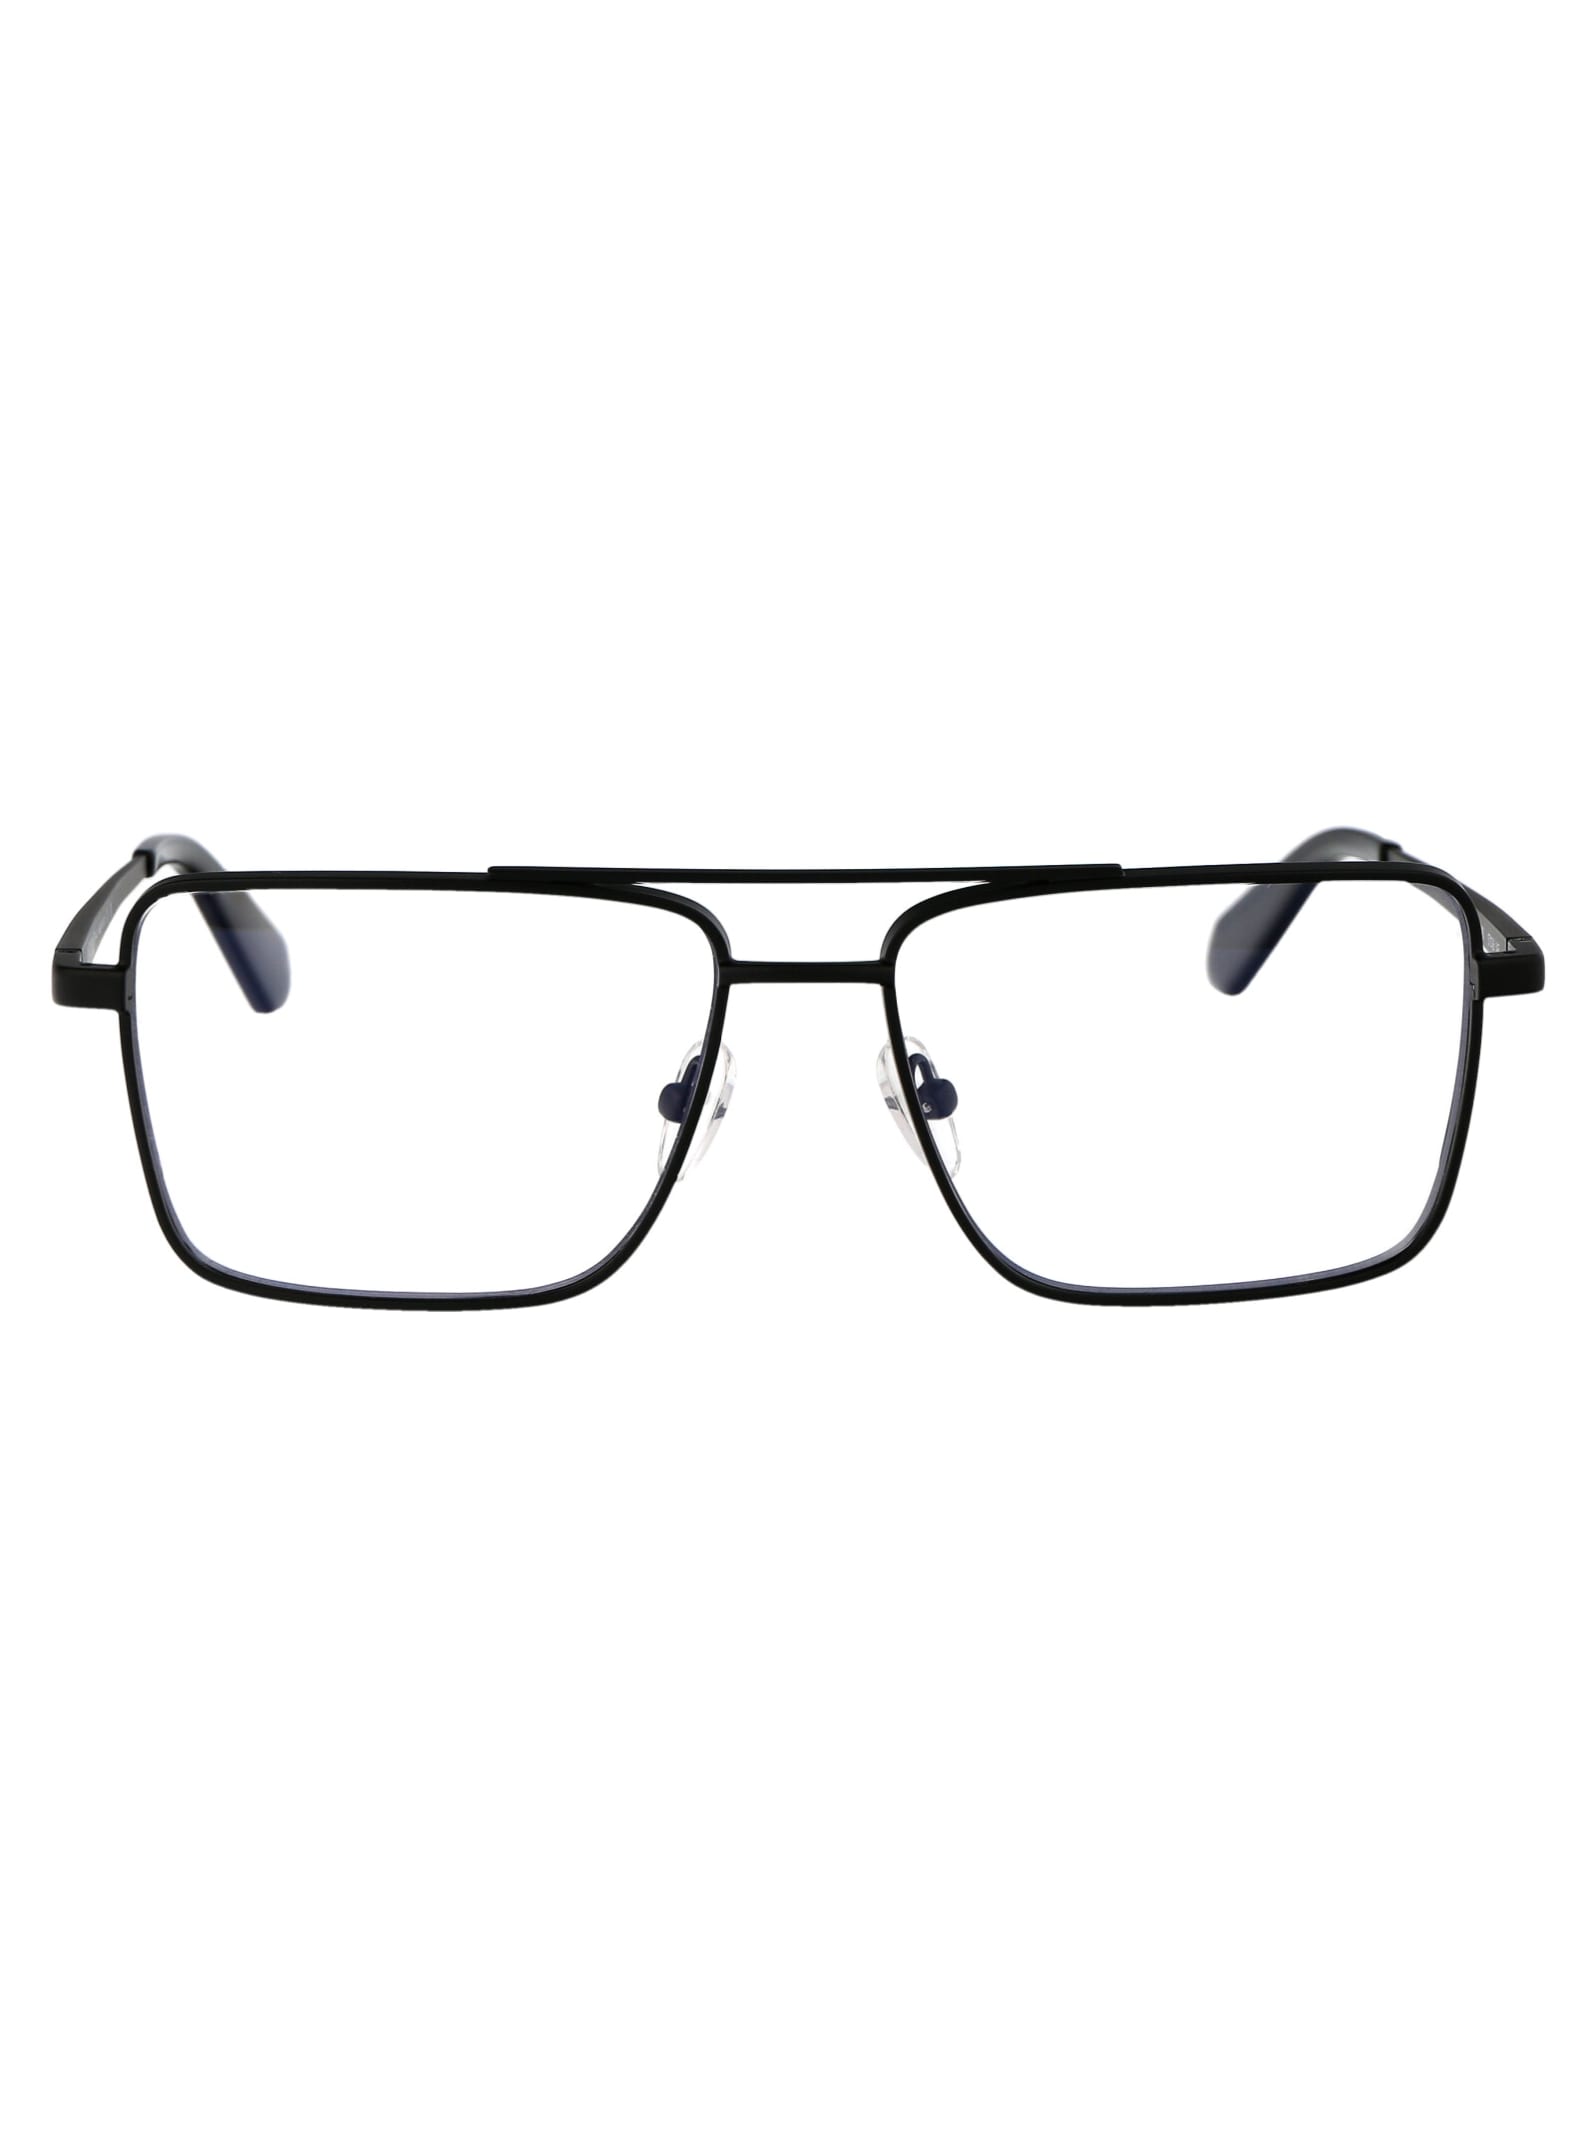 Optical Style 66 Glasses